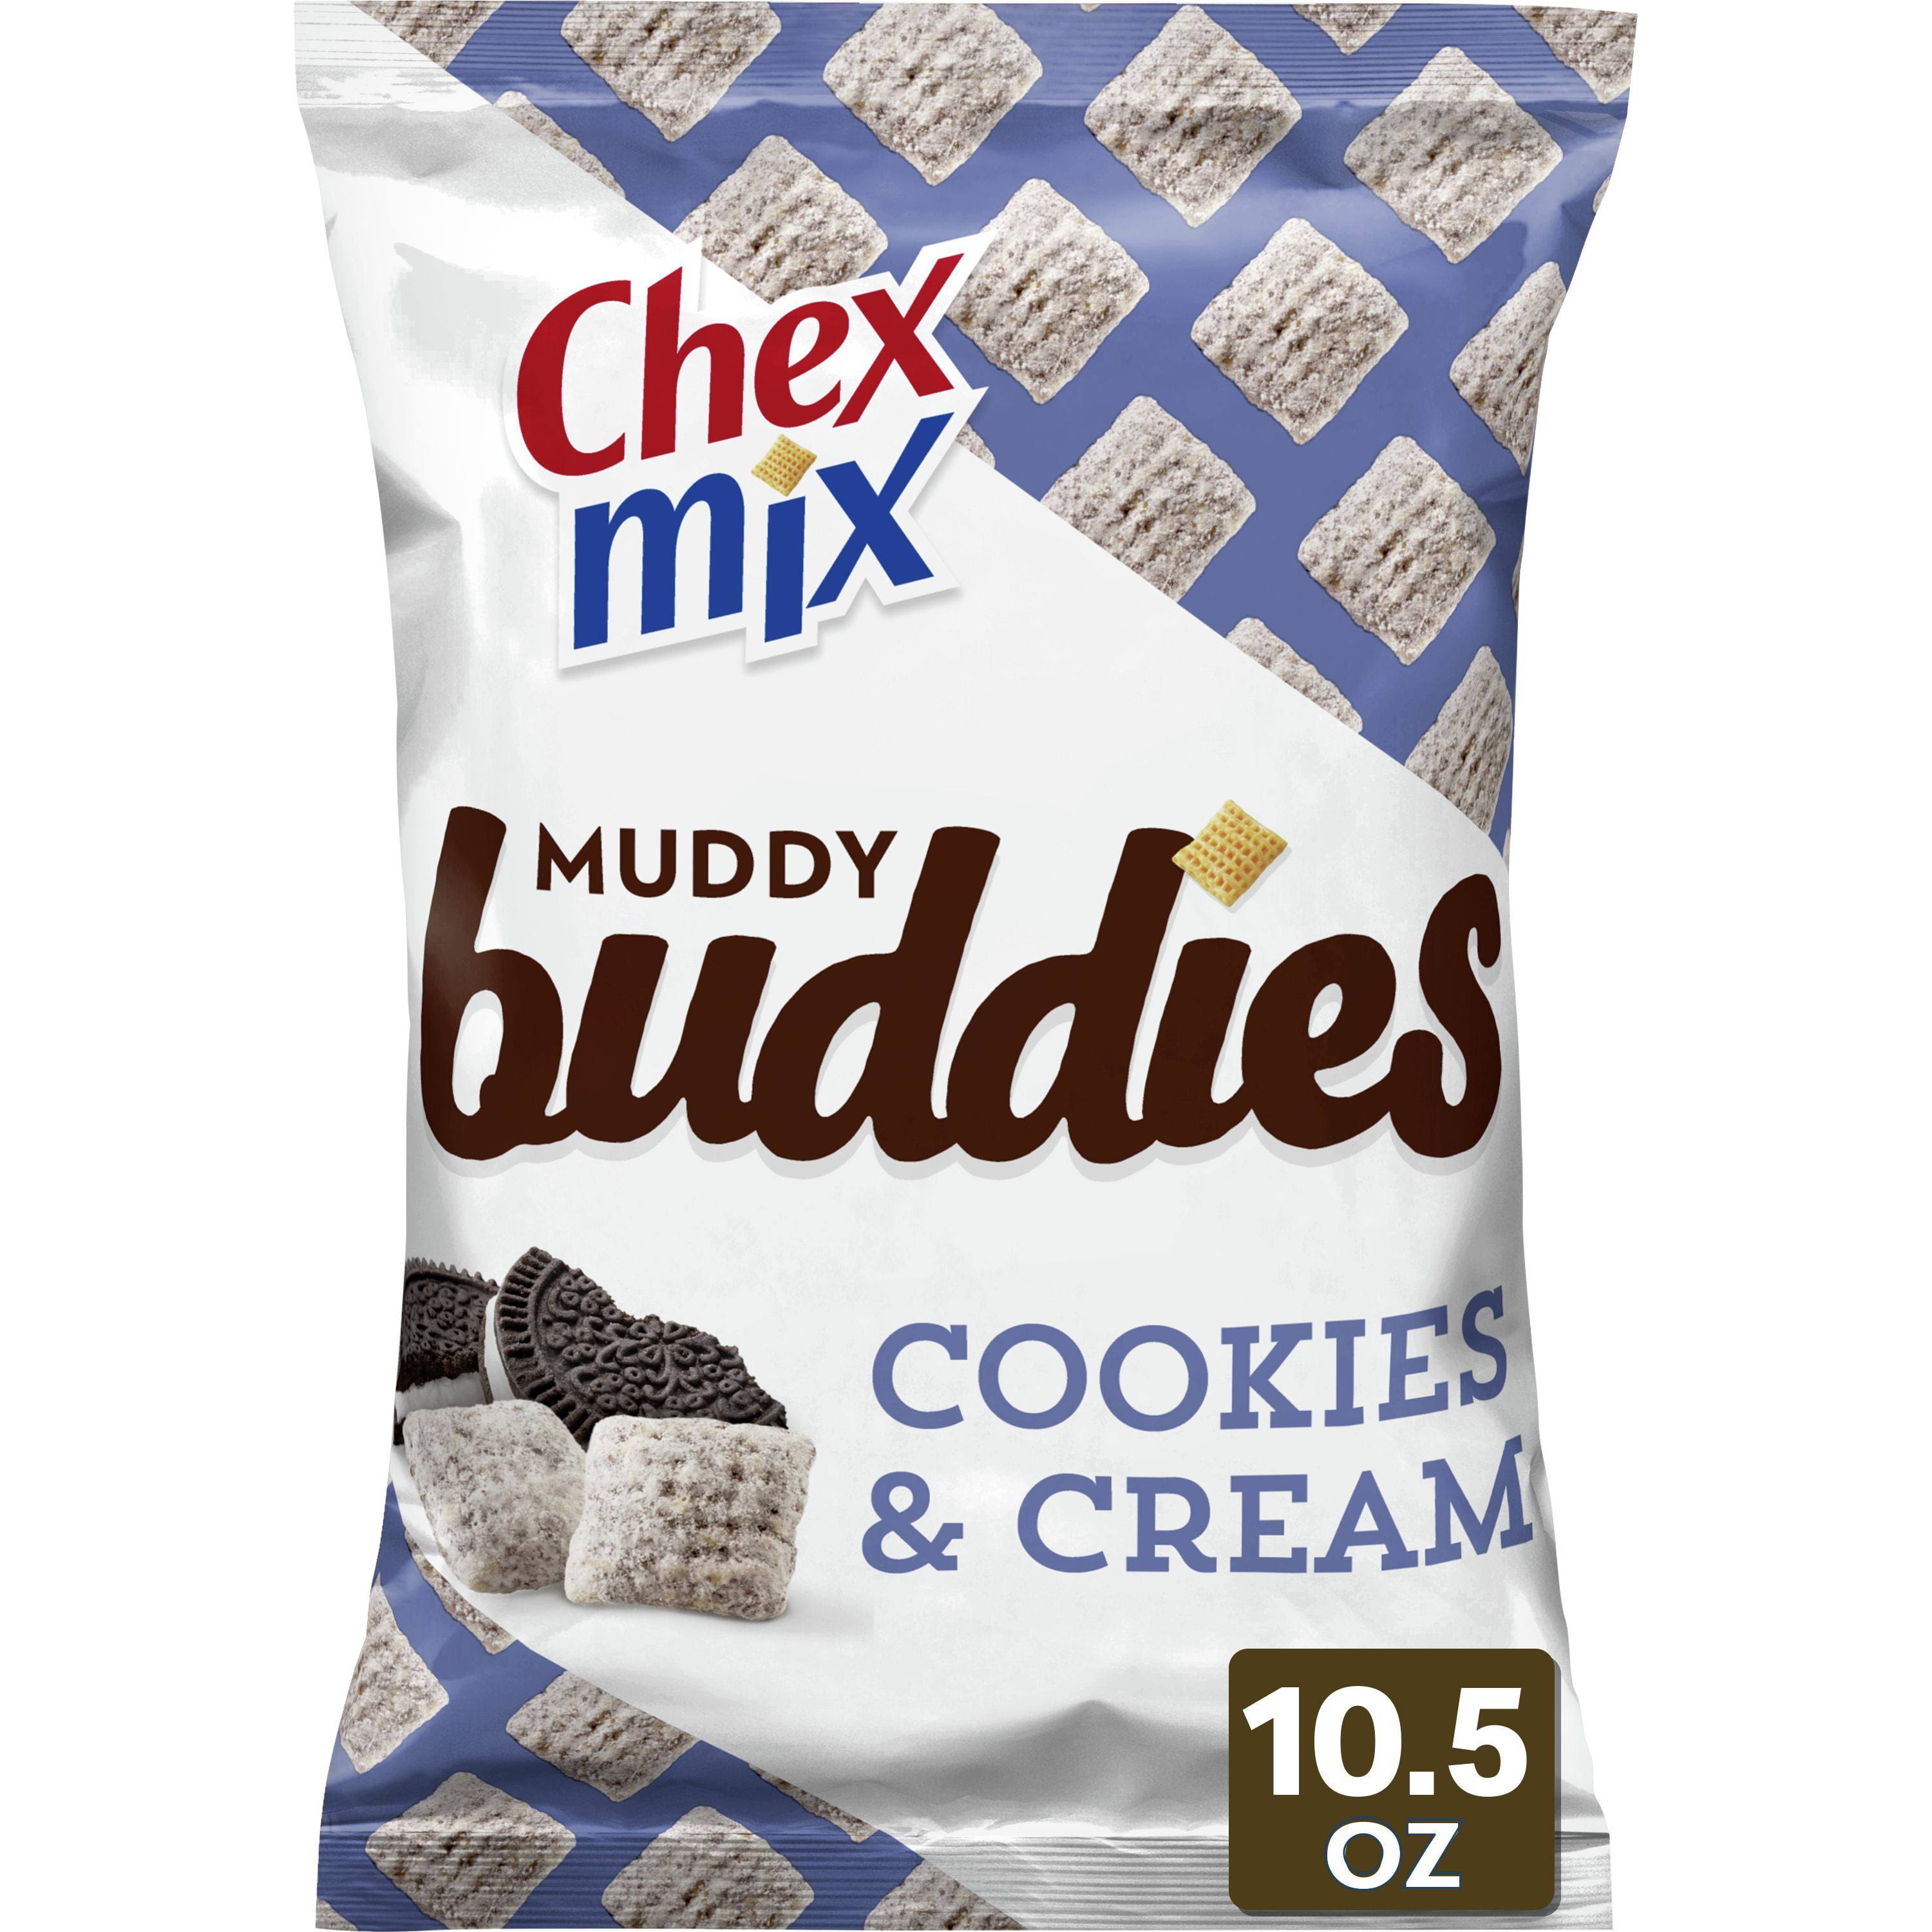 Chex Mix Muddy Buddies Snack Mix, Cookies & Cream - 10.5 oz bag